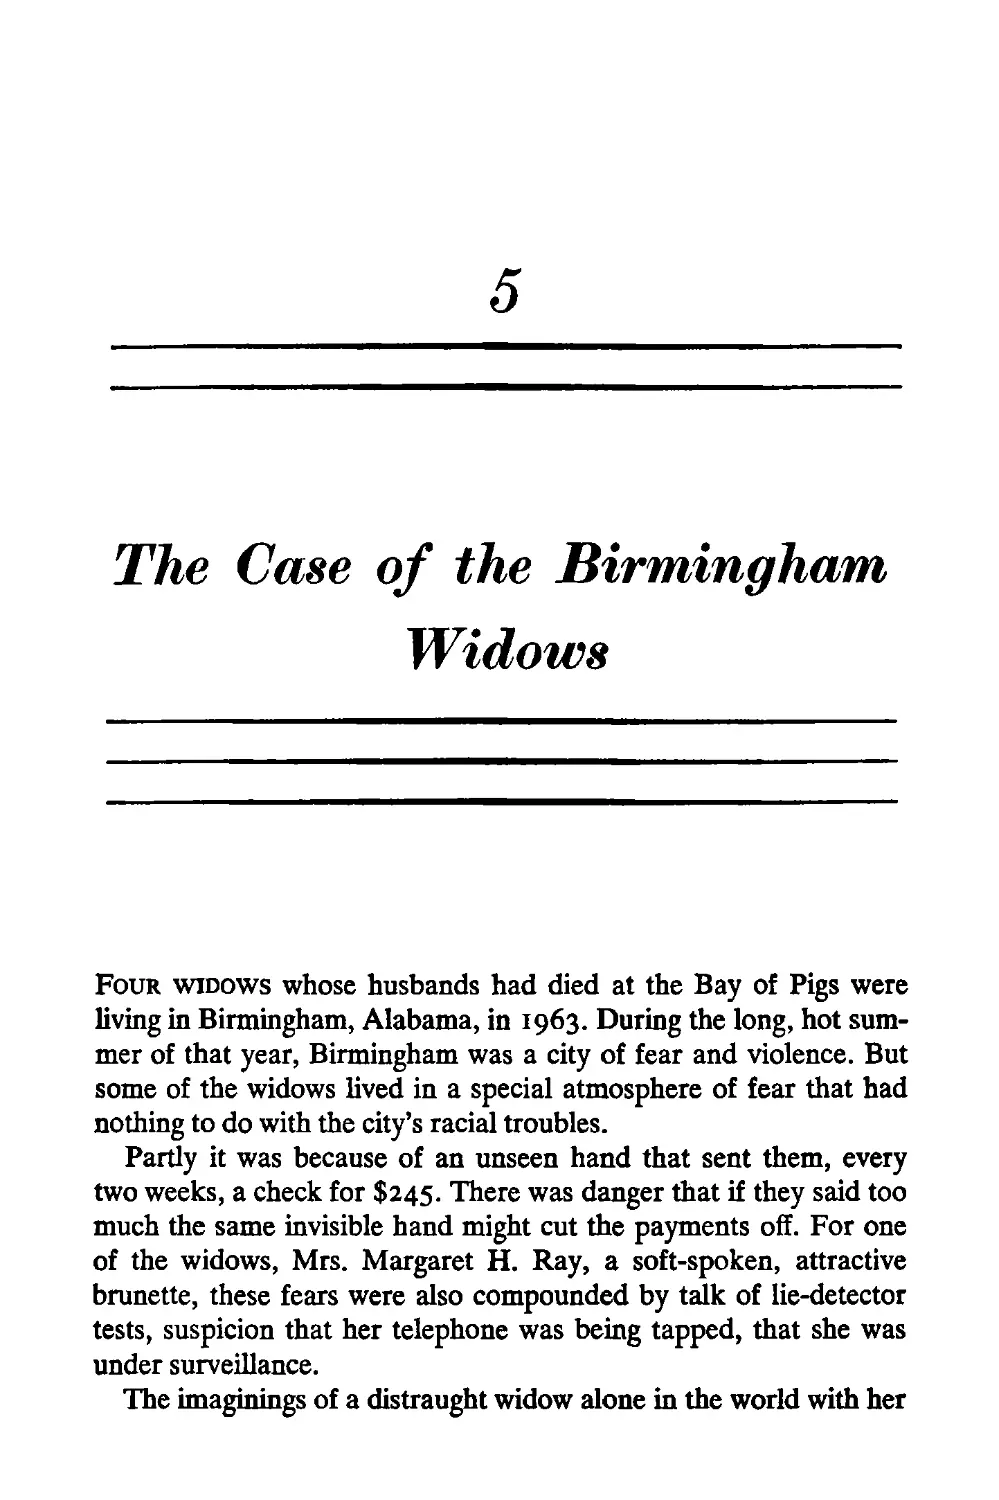 5. The Case Of The Birmingham Widows